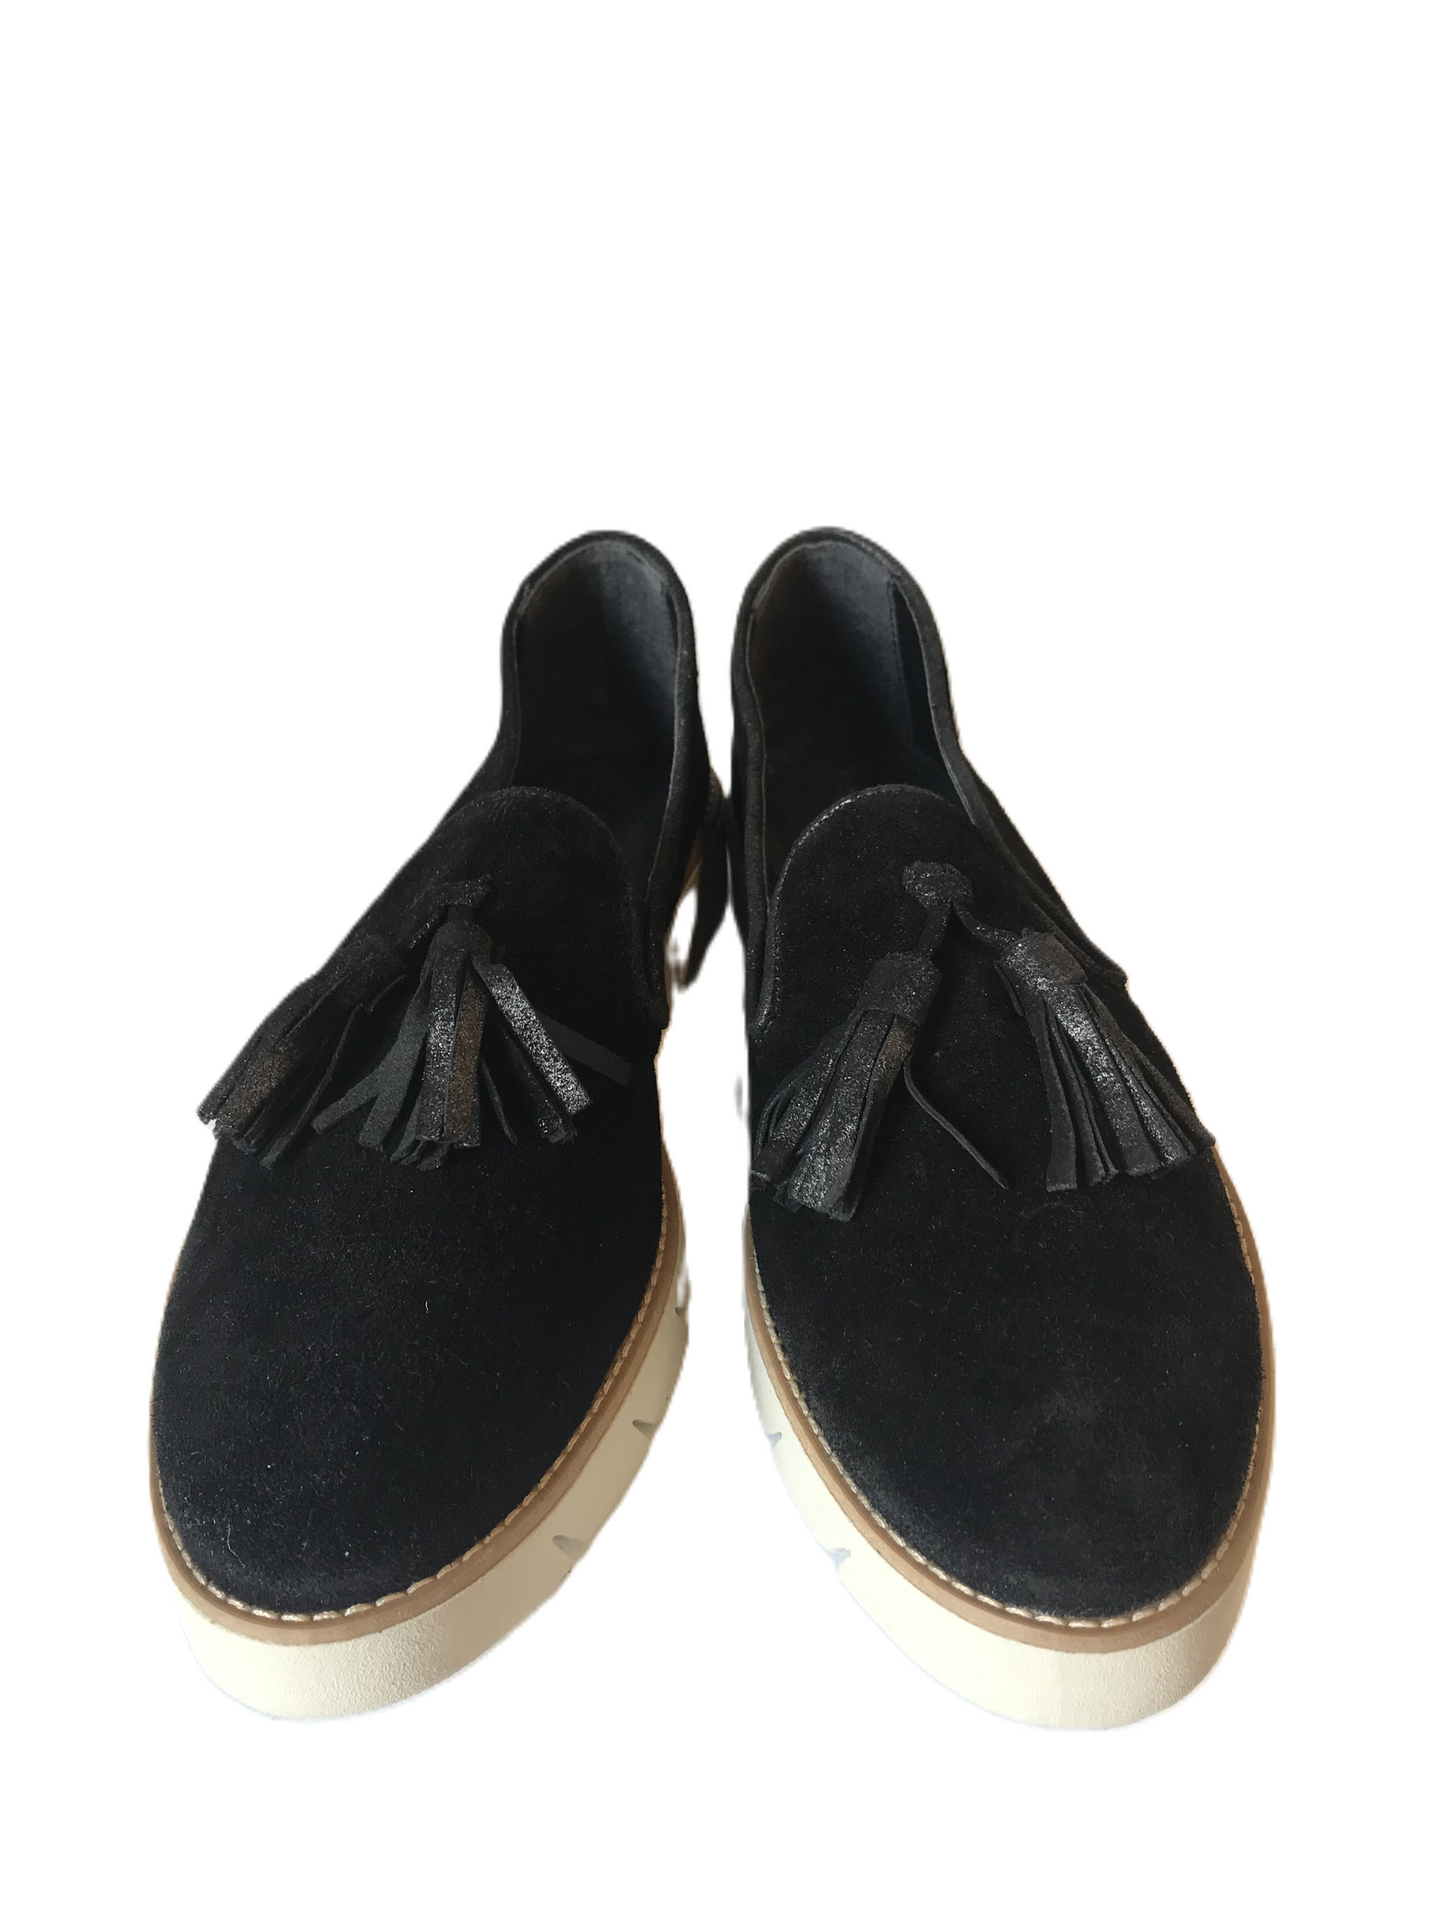 Black Shoes Flats By The Flexx Size: 10